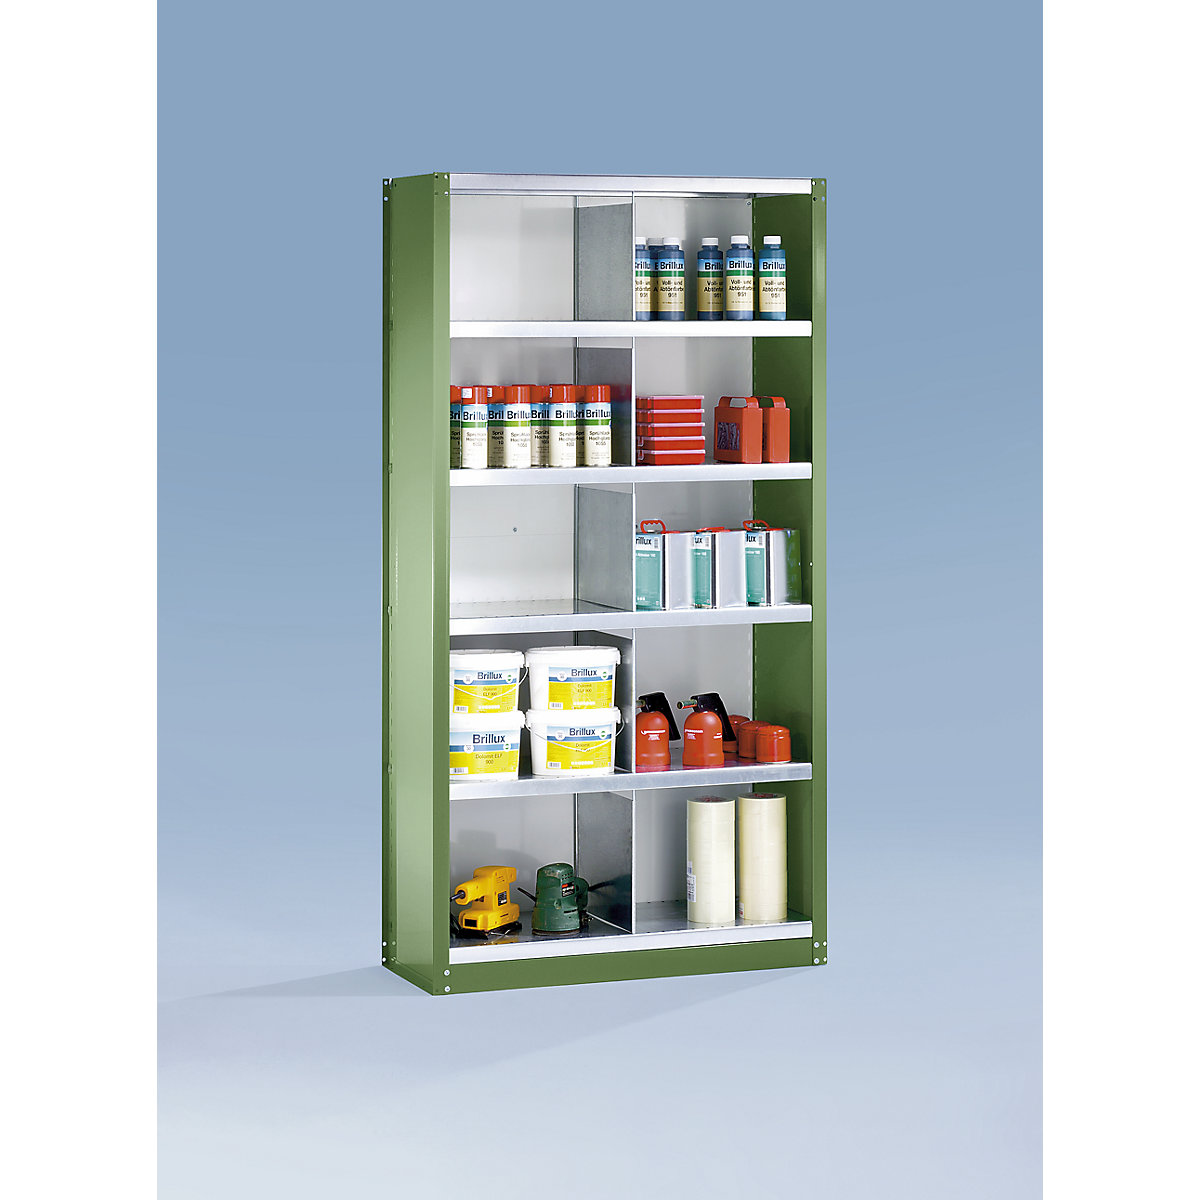 Boltless shelf unit system, shelf unit height 1990 mm – eurokraft pro, 10 compartments, WxD 1000 x 500 mm, extension shelf unit, gentian blue RAL 5010-1